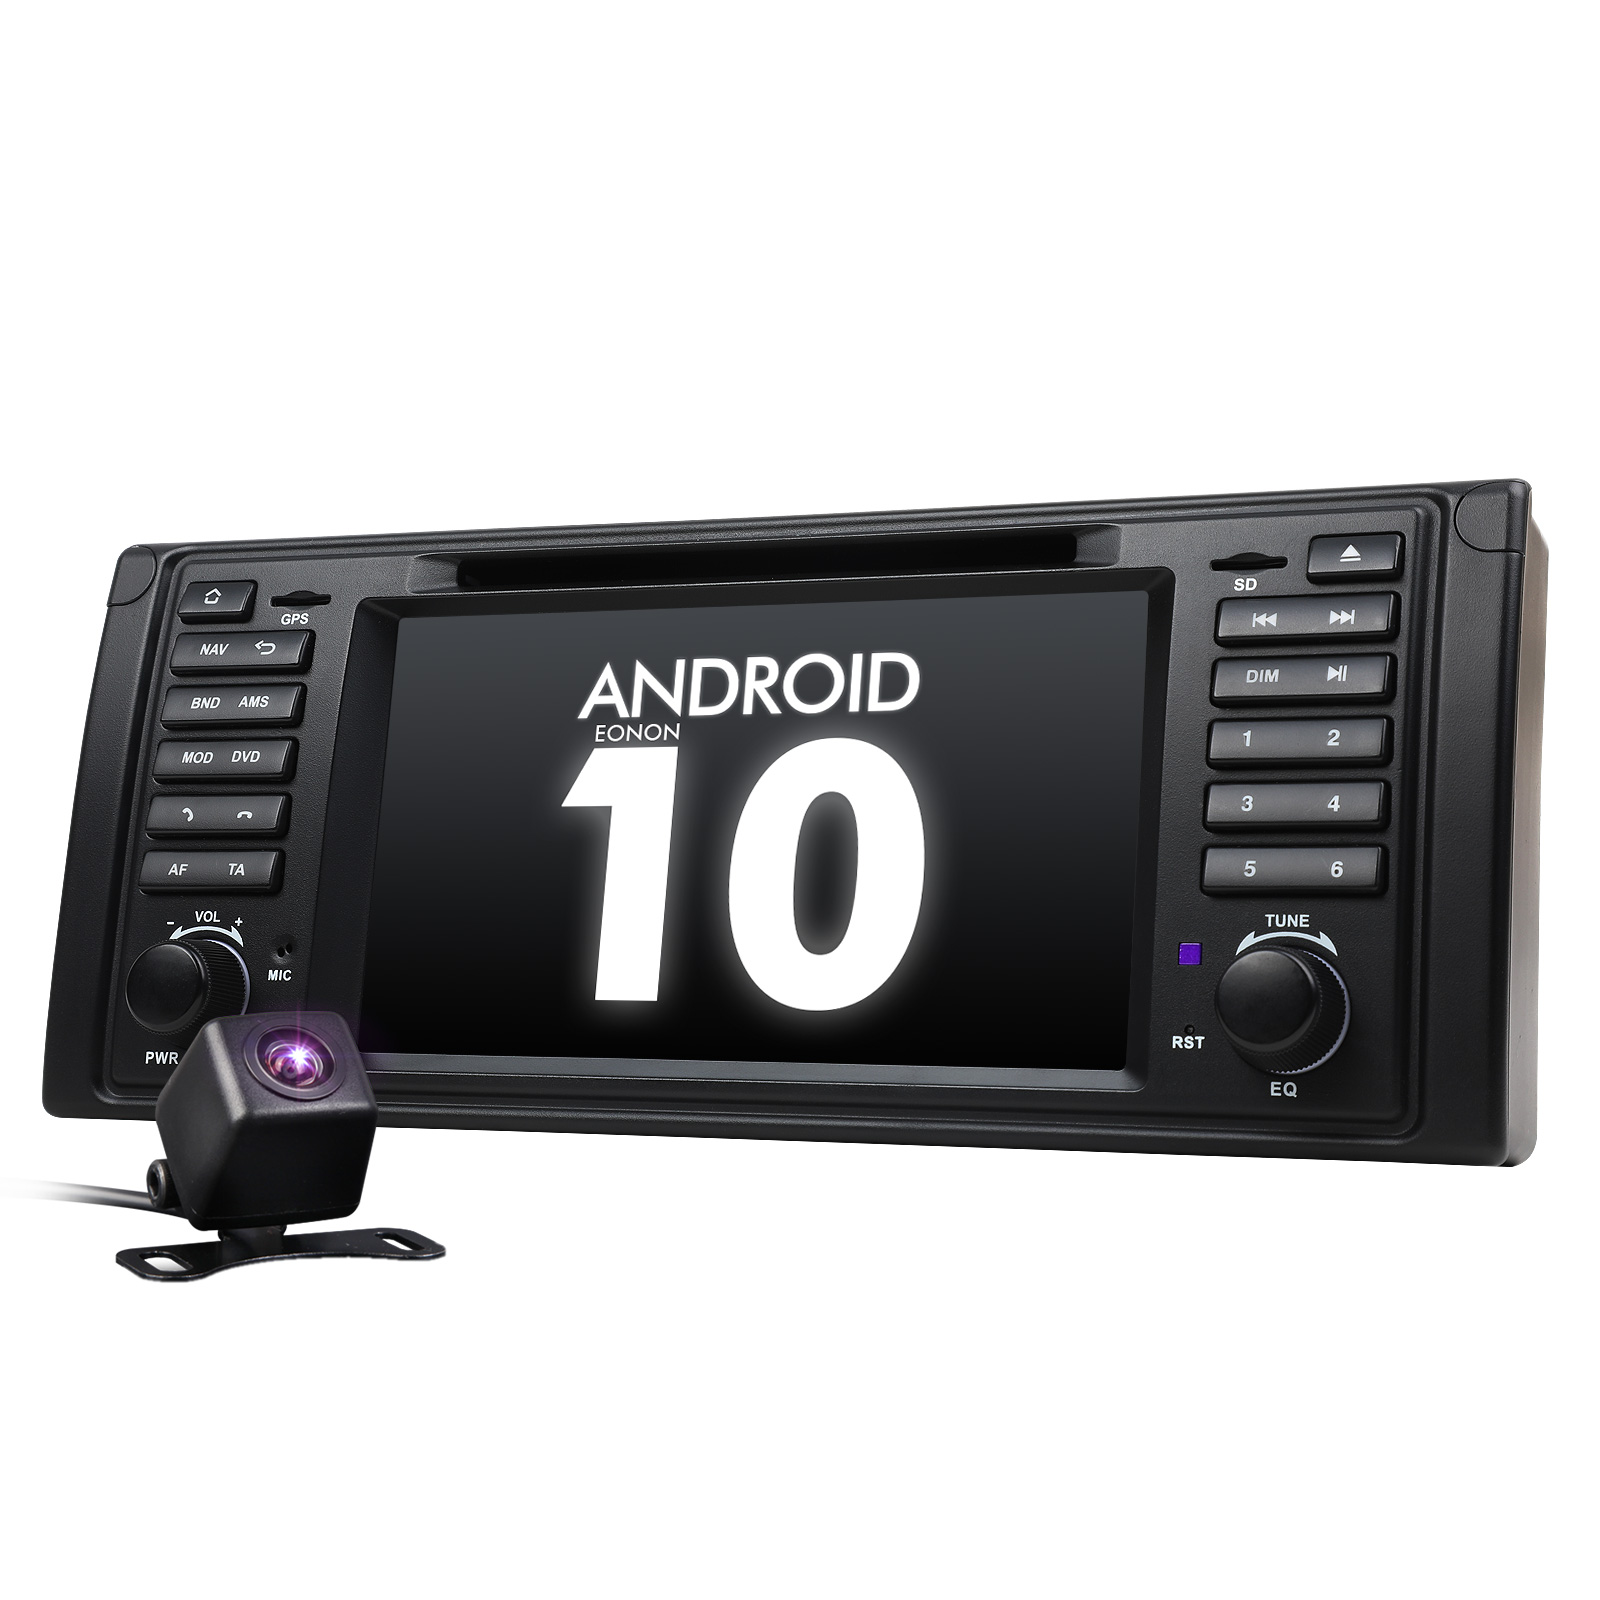 US For BMW E39 Android 10 7" Car DVD CD GPS Radio Navi